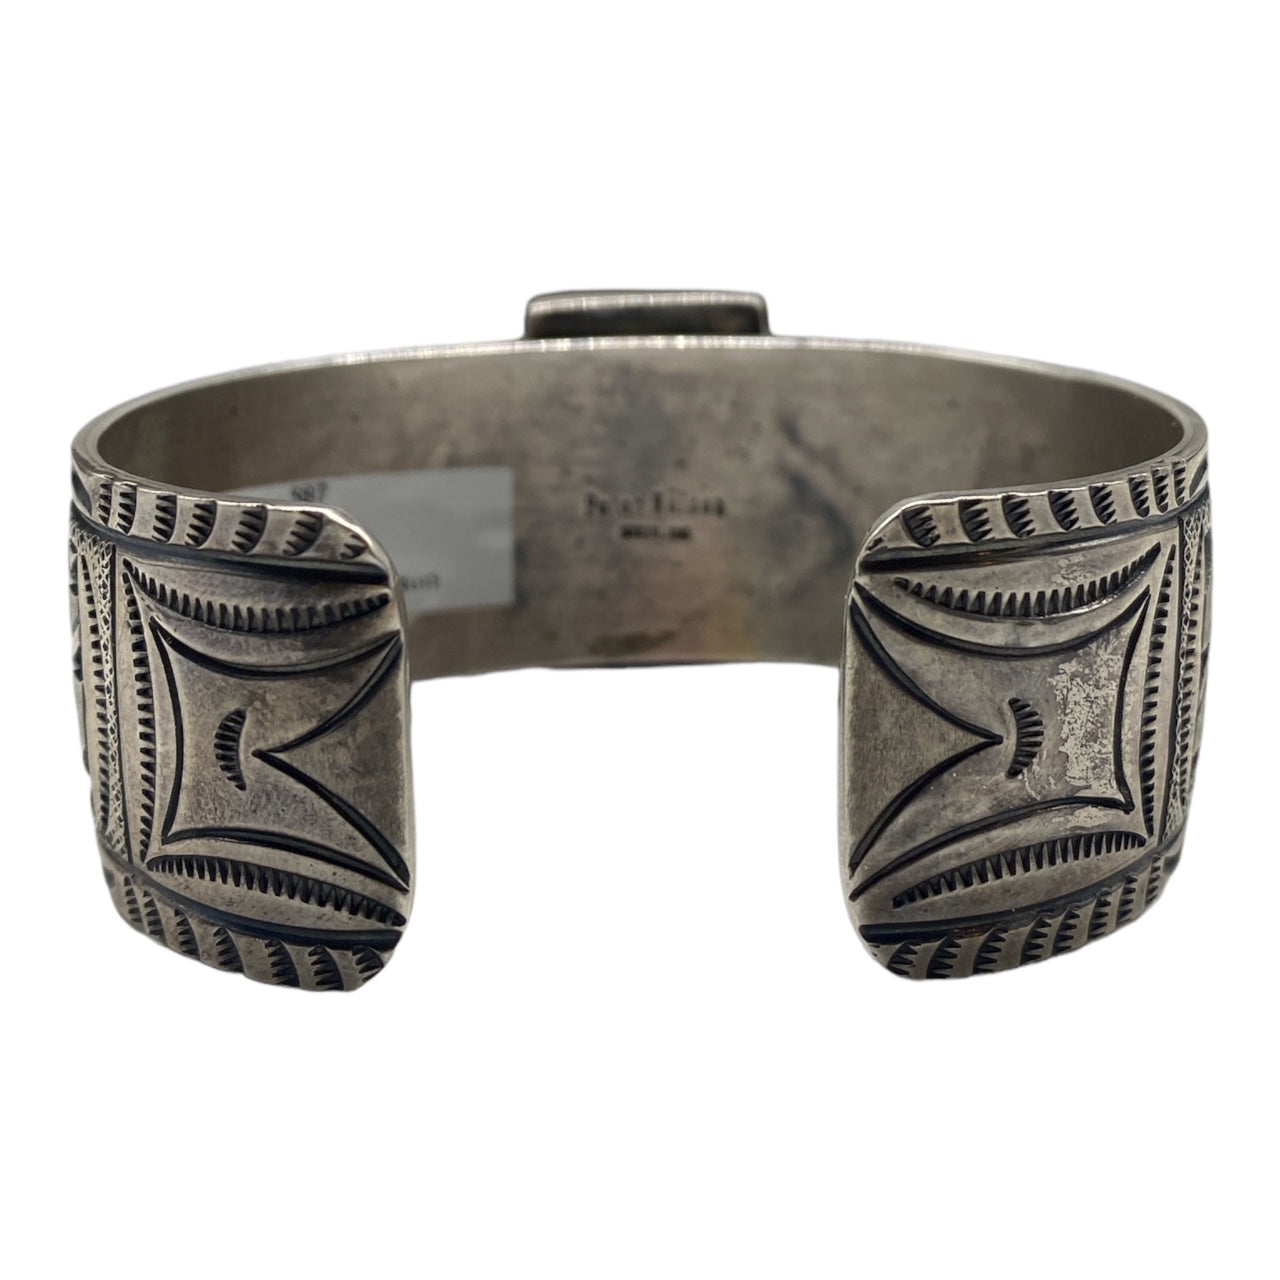 Peter Nelson Navajo Turquoise & Overlay Bracelet